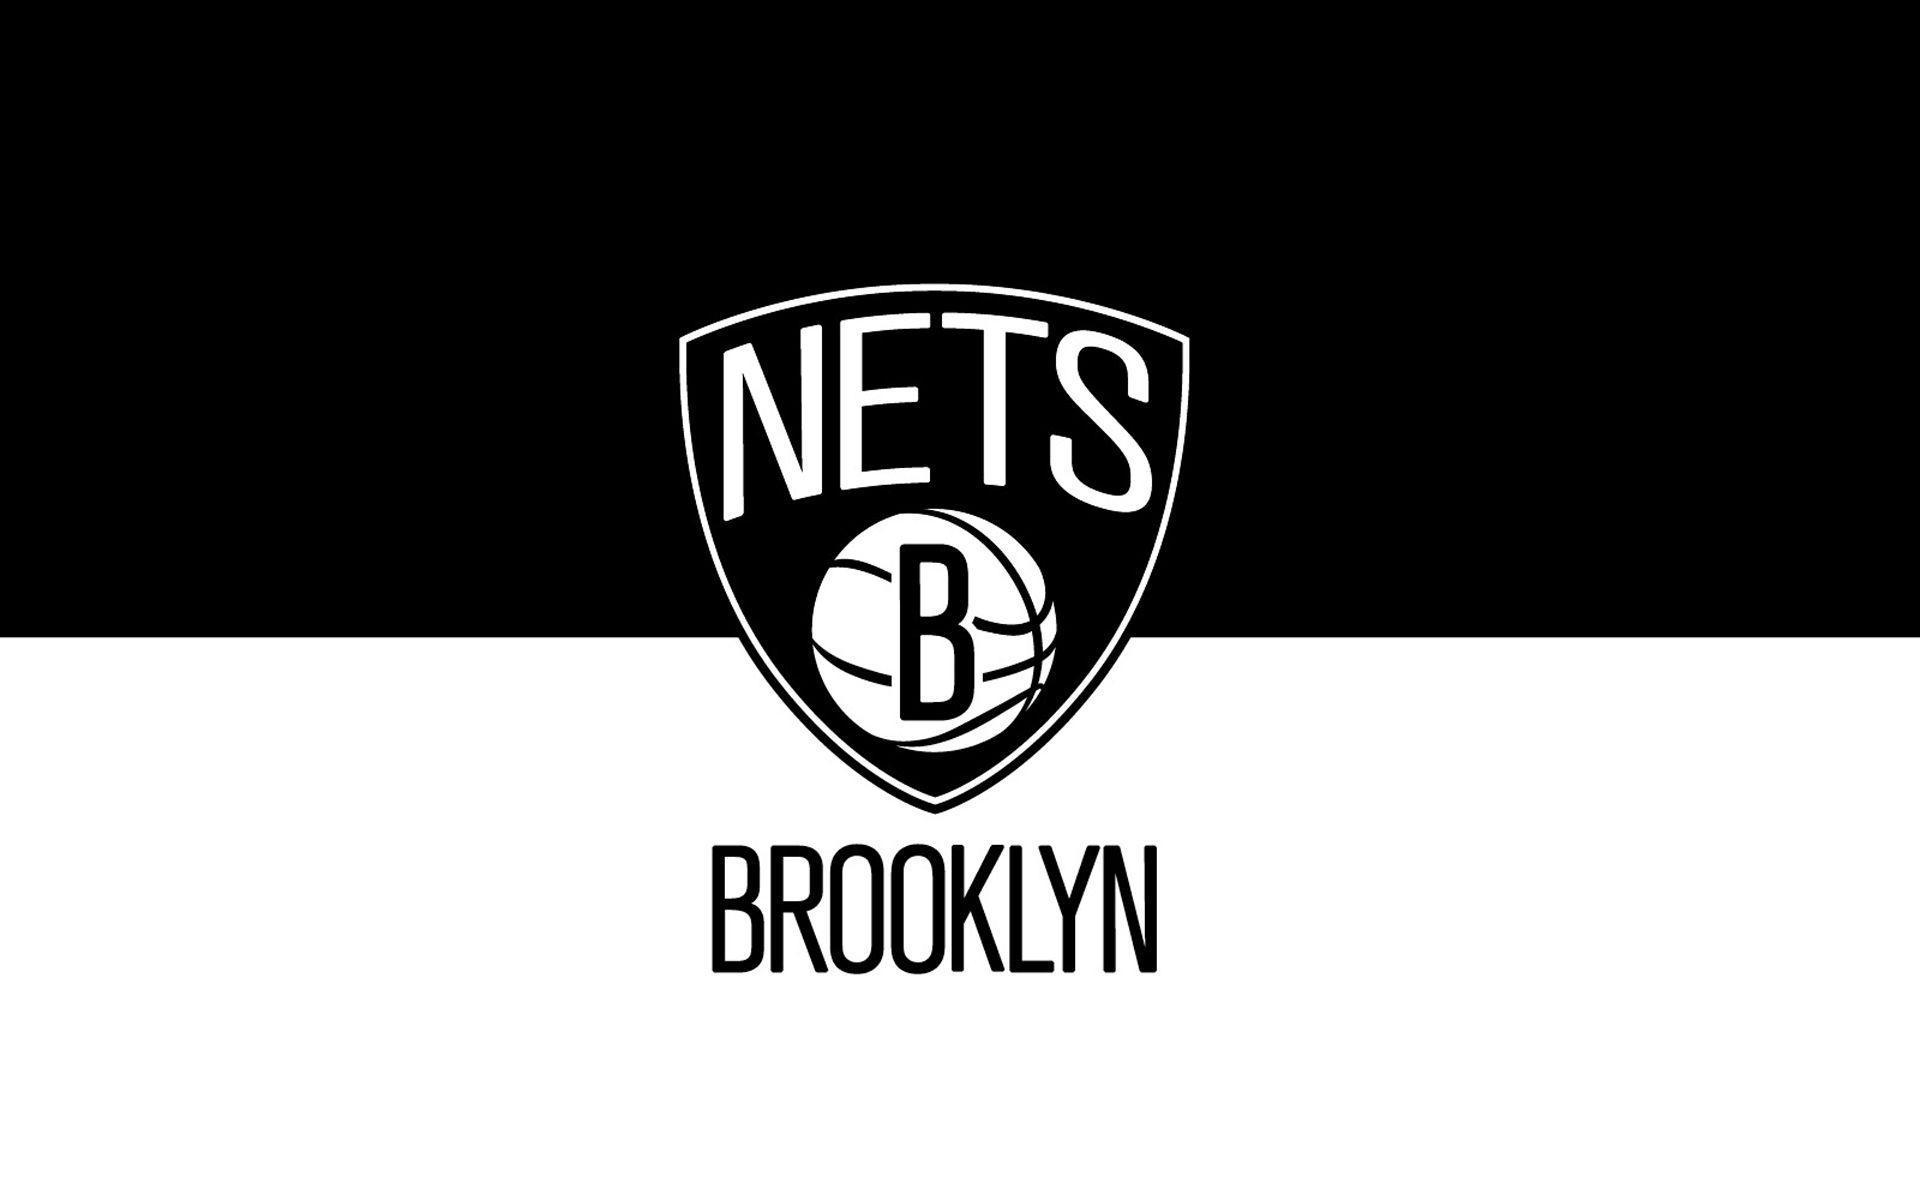 Brooklyn Nets wallpaper  Brooklyn nets, Basketball wallpaper, Brooklyn